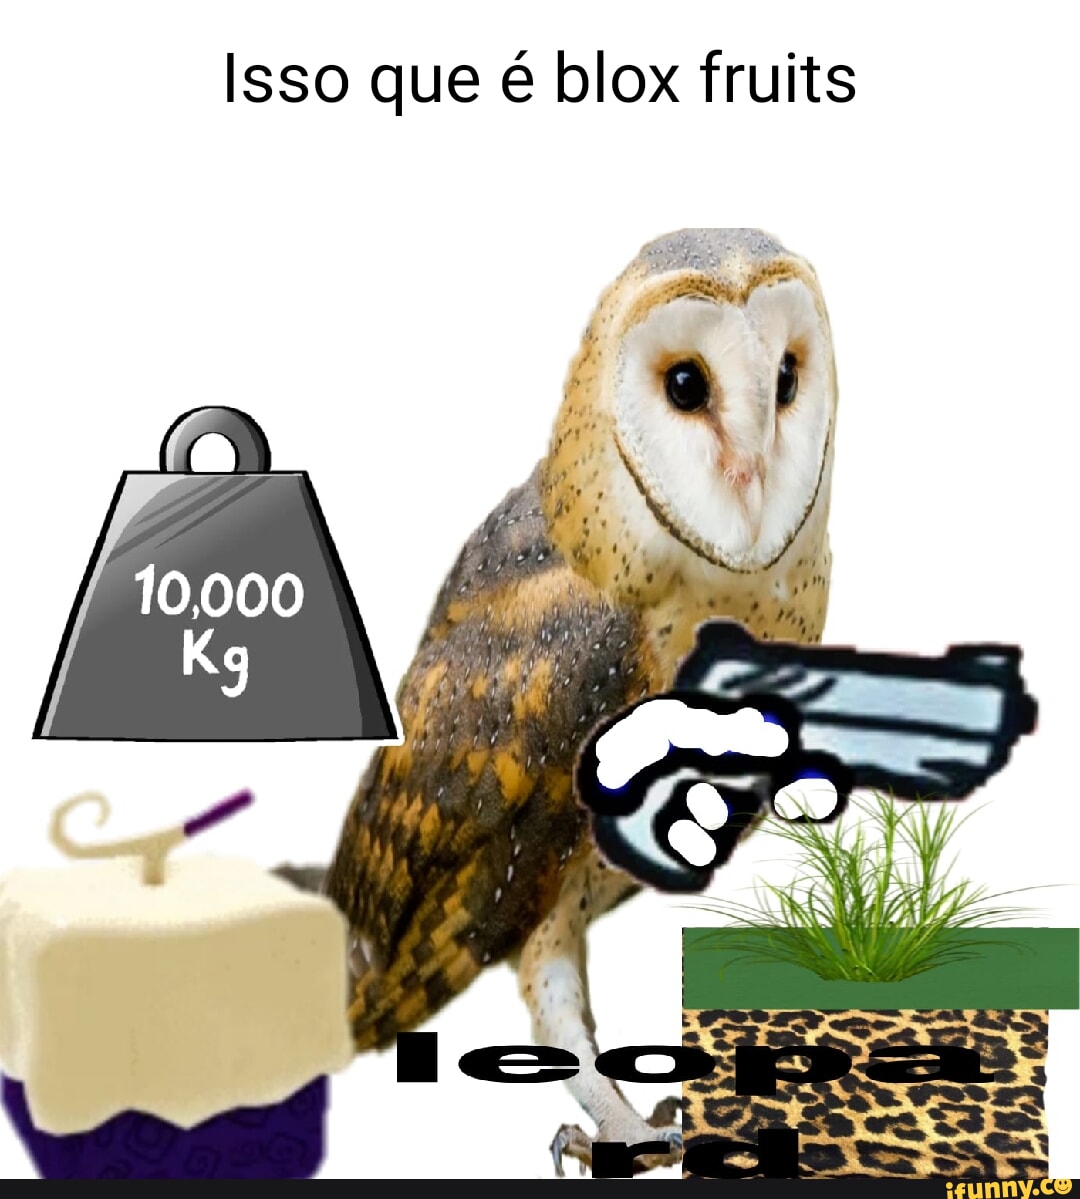 Ox fruits Rank de frutas para PVP: TIERMAKER - iFunny Brazil